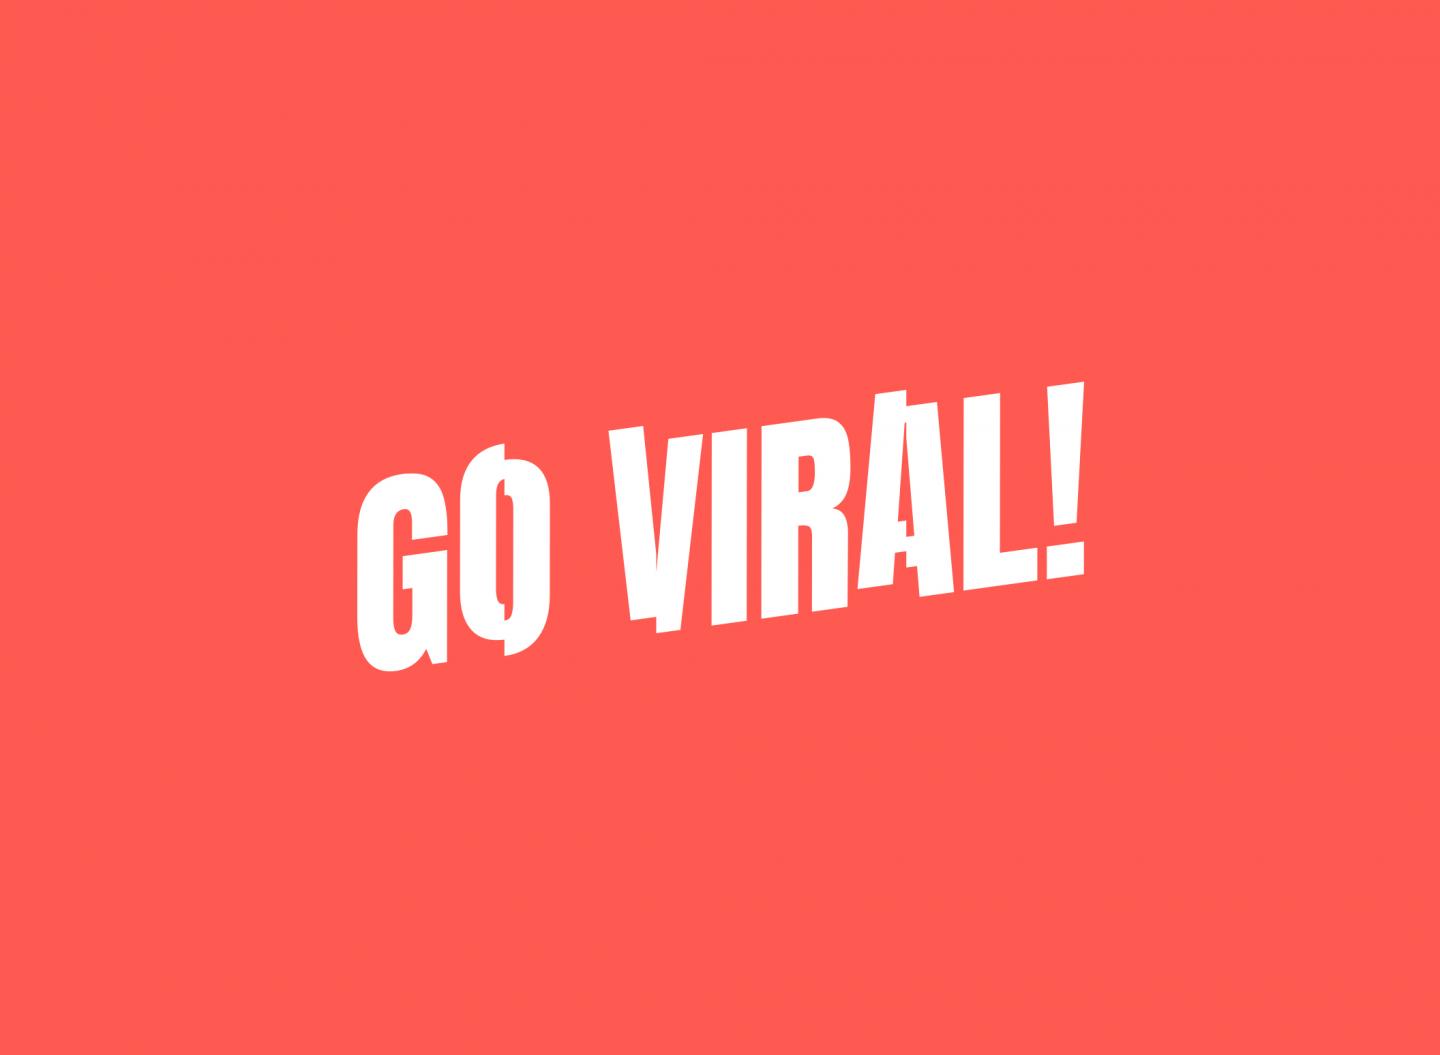 Go Viral!